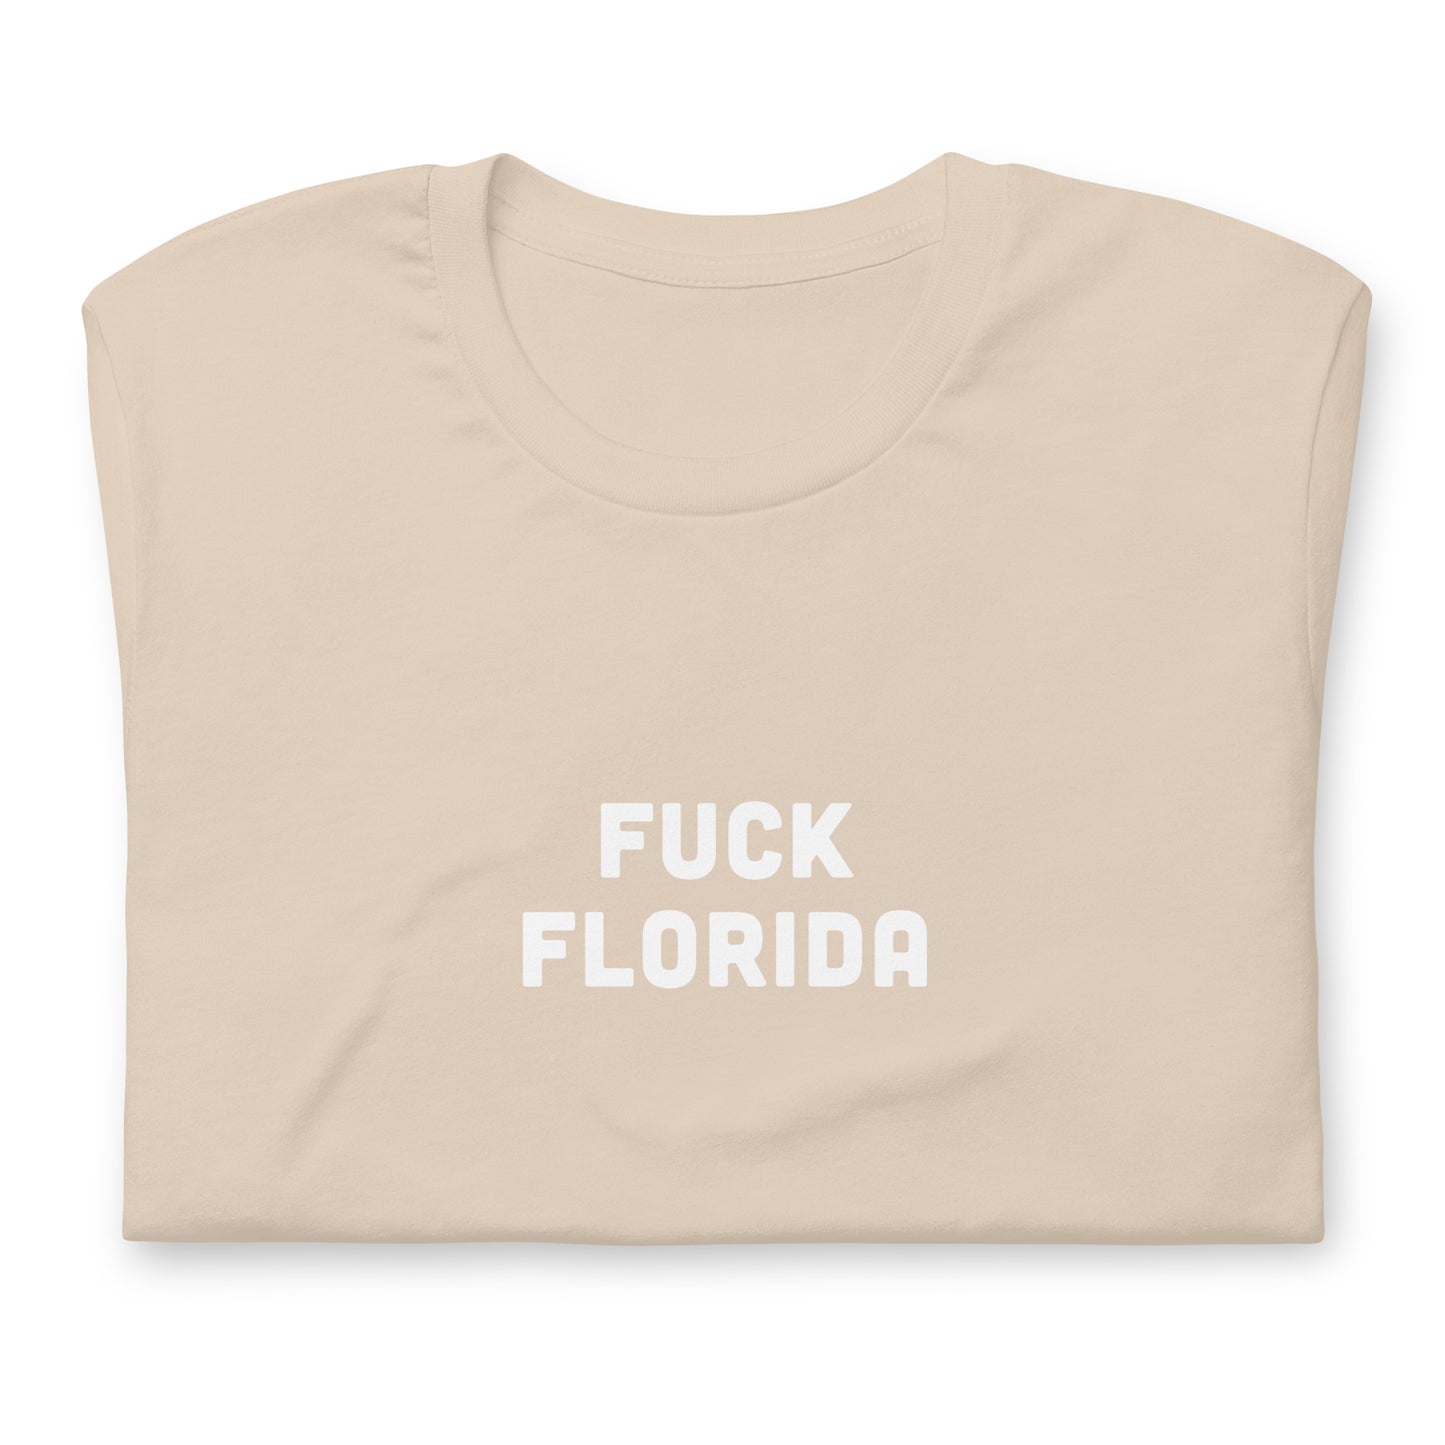 Fuck Florida T-Shirt Size L Color Asphalt